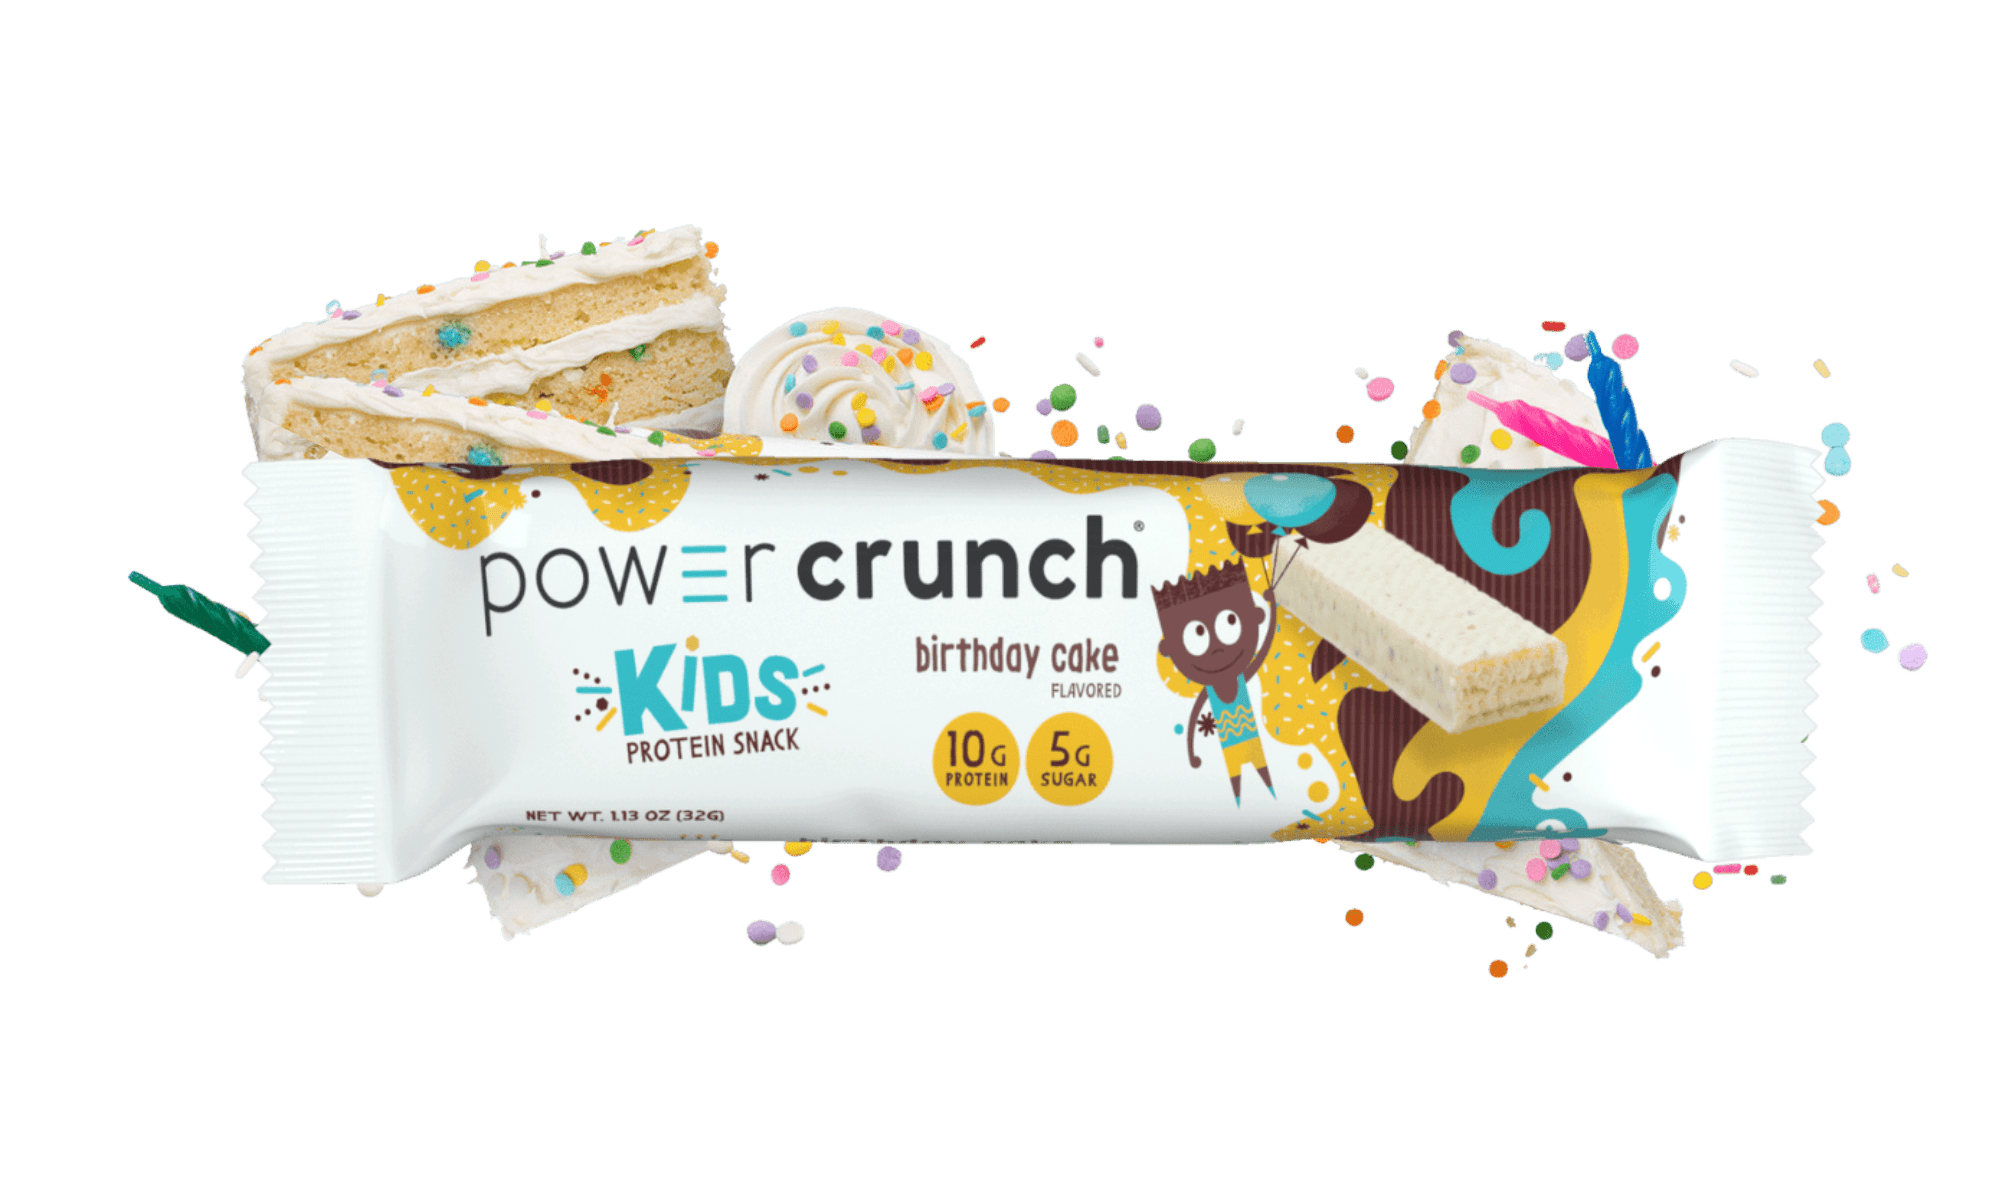 Power Crunch Kids Birthday Cake Protein Bars for kids